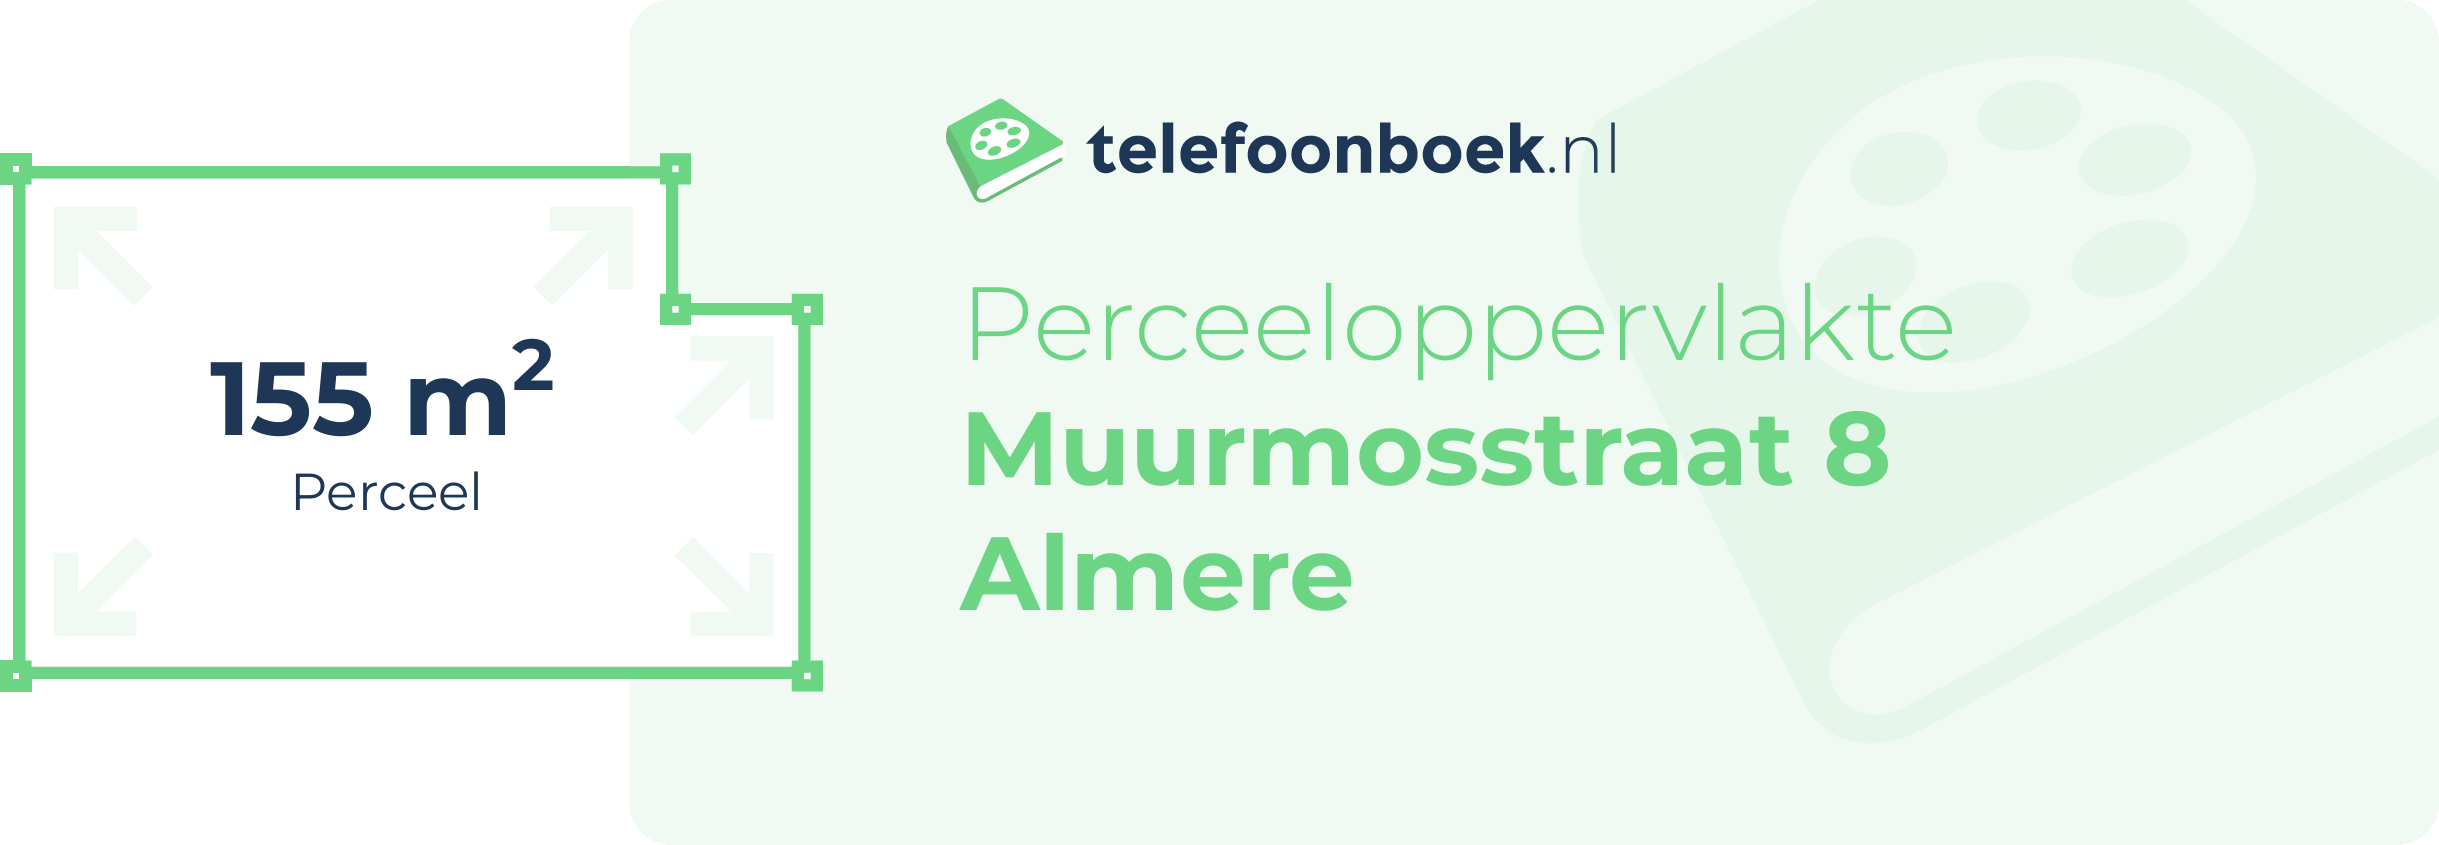 Perceeloppervlakte Muurmosstraat 8 Almere